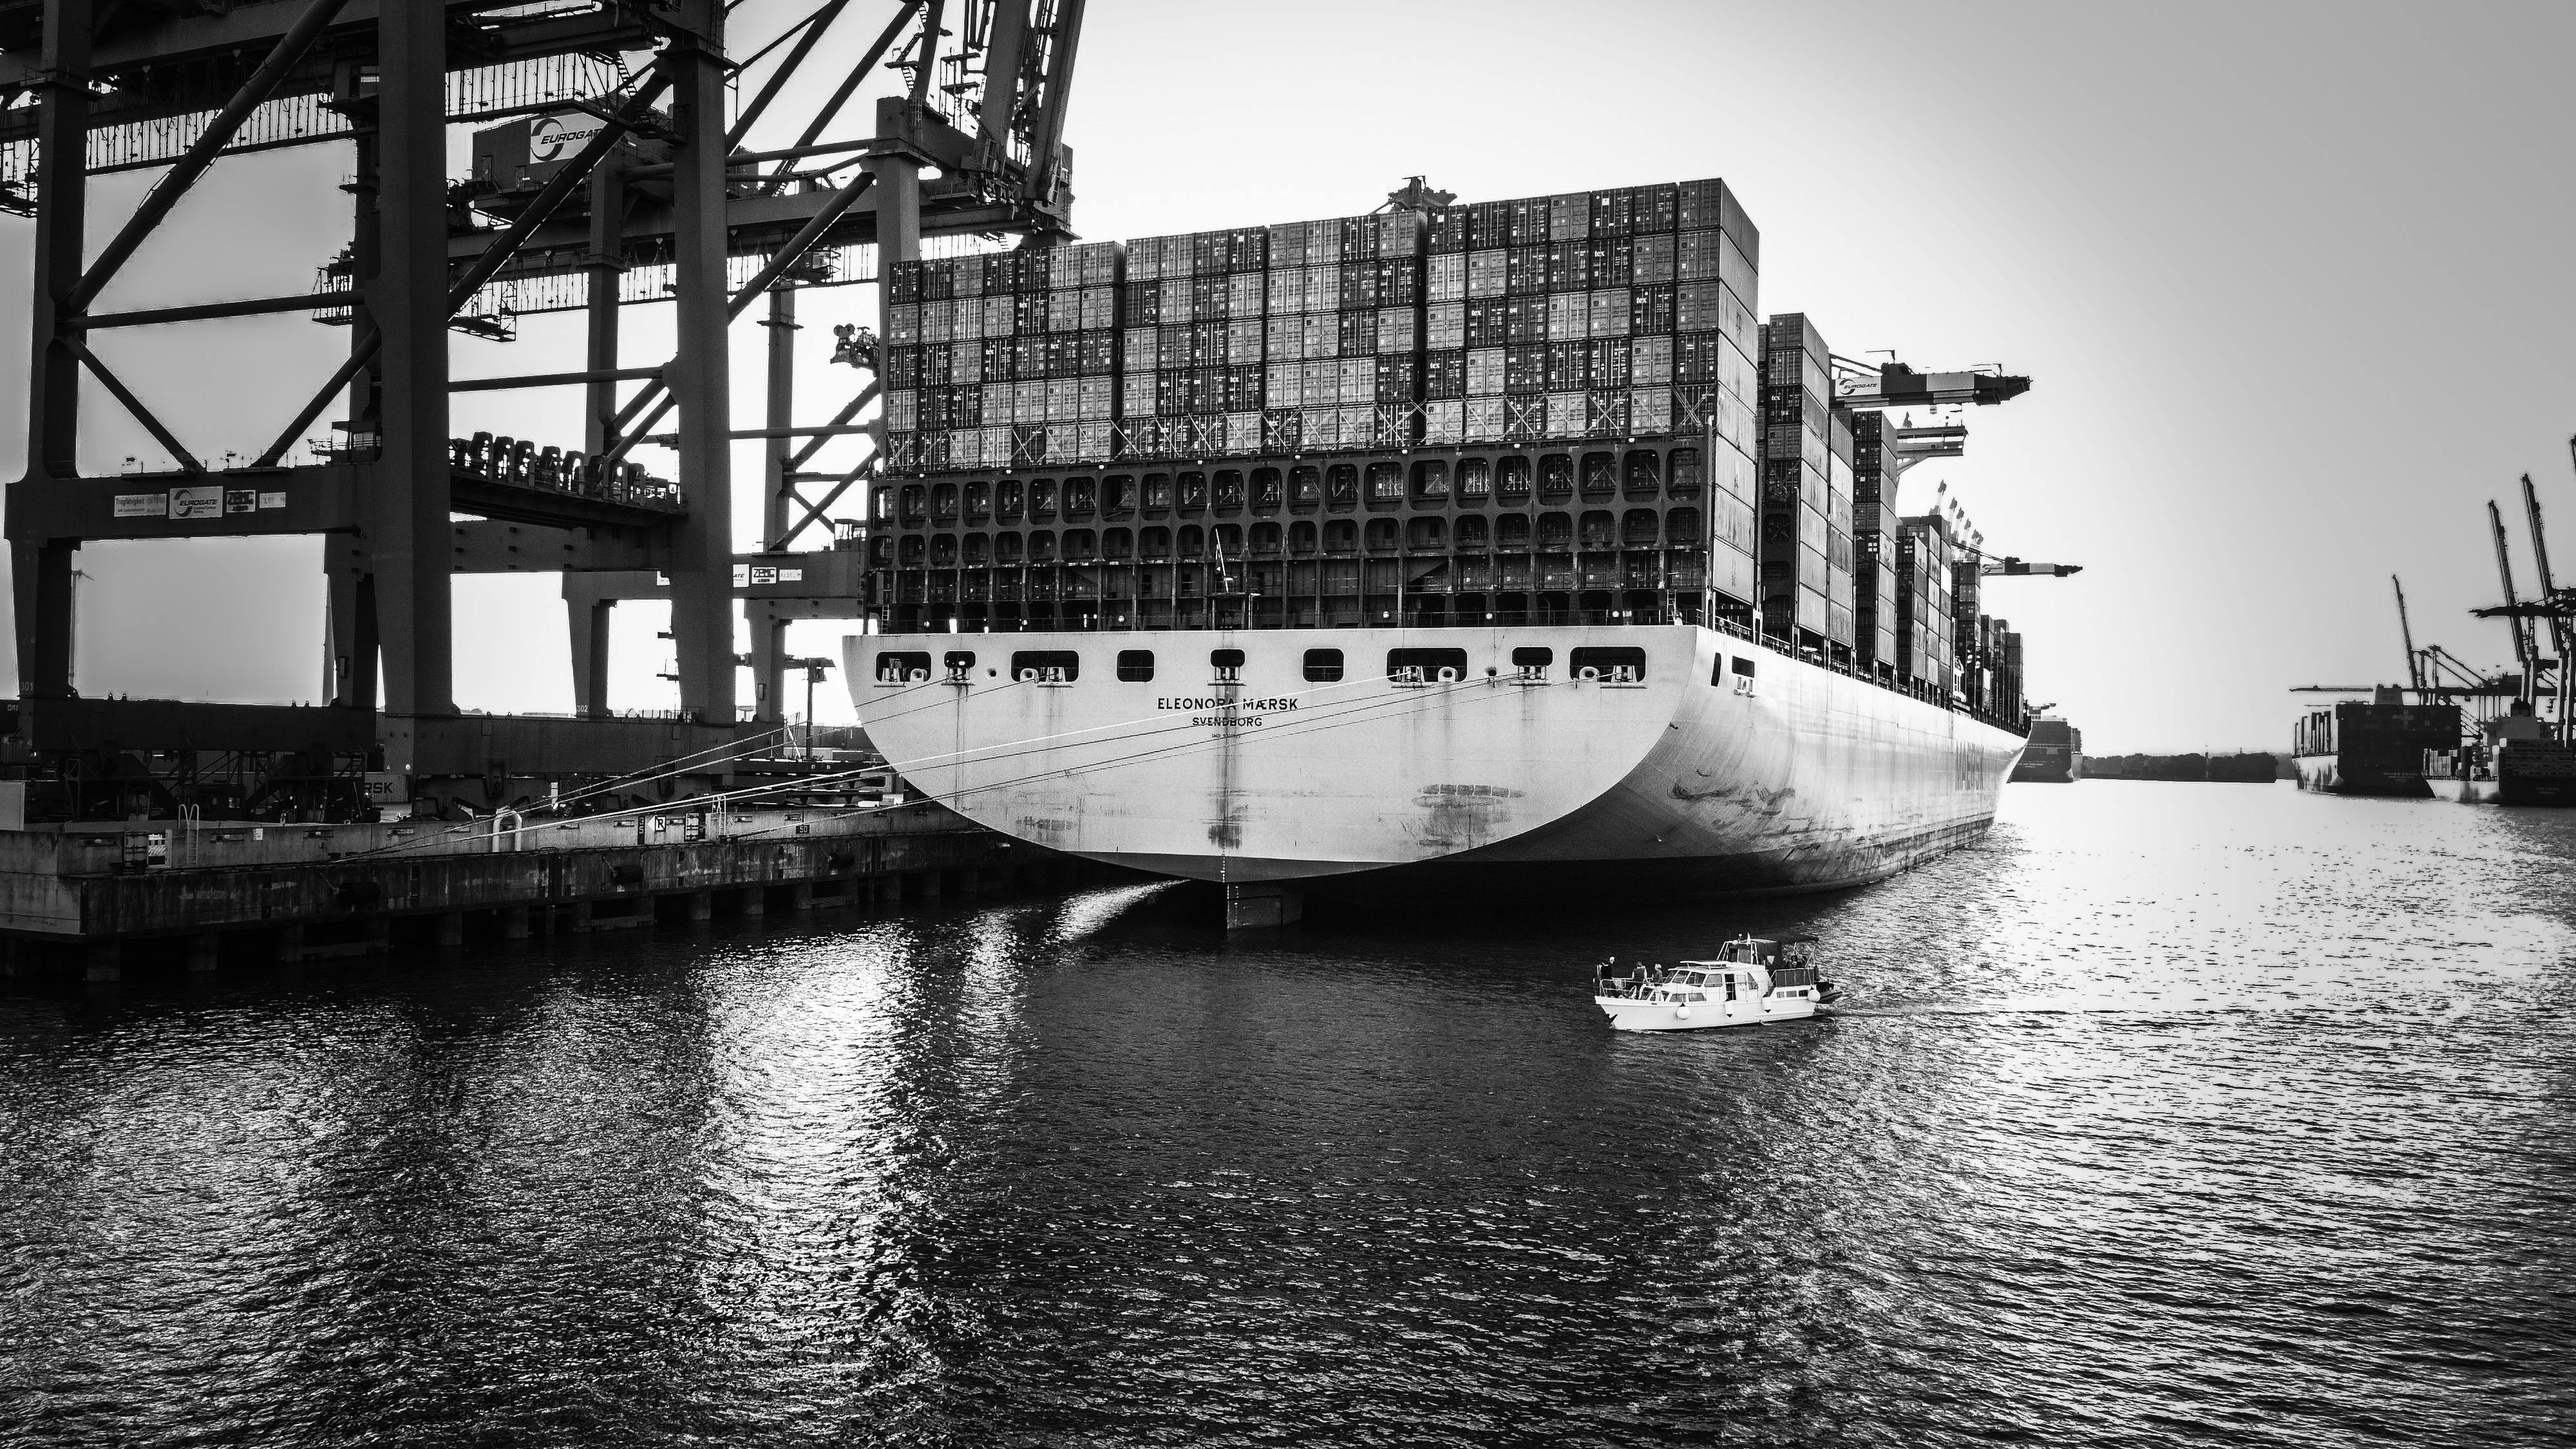 cargo ship black and white